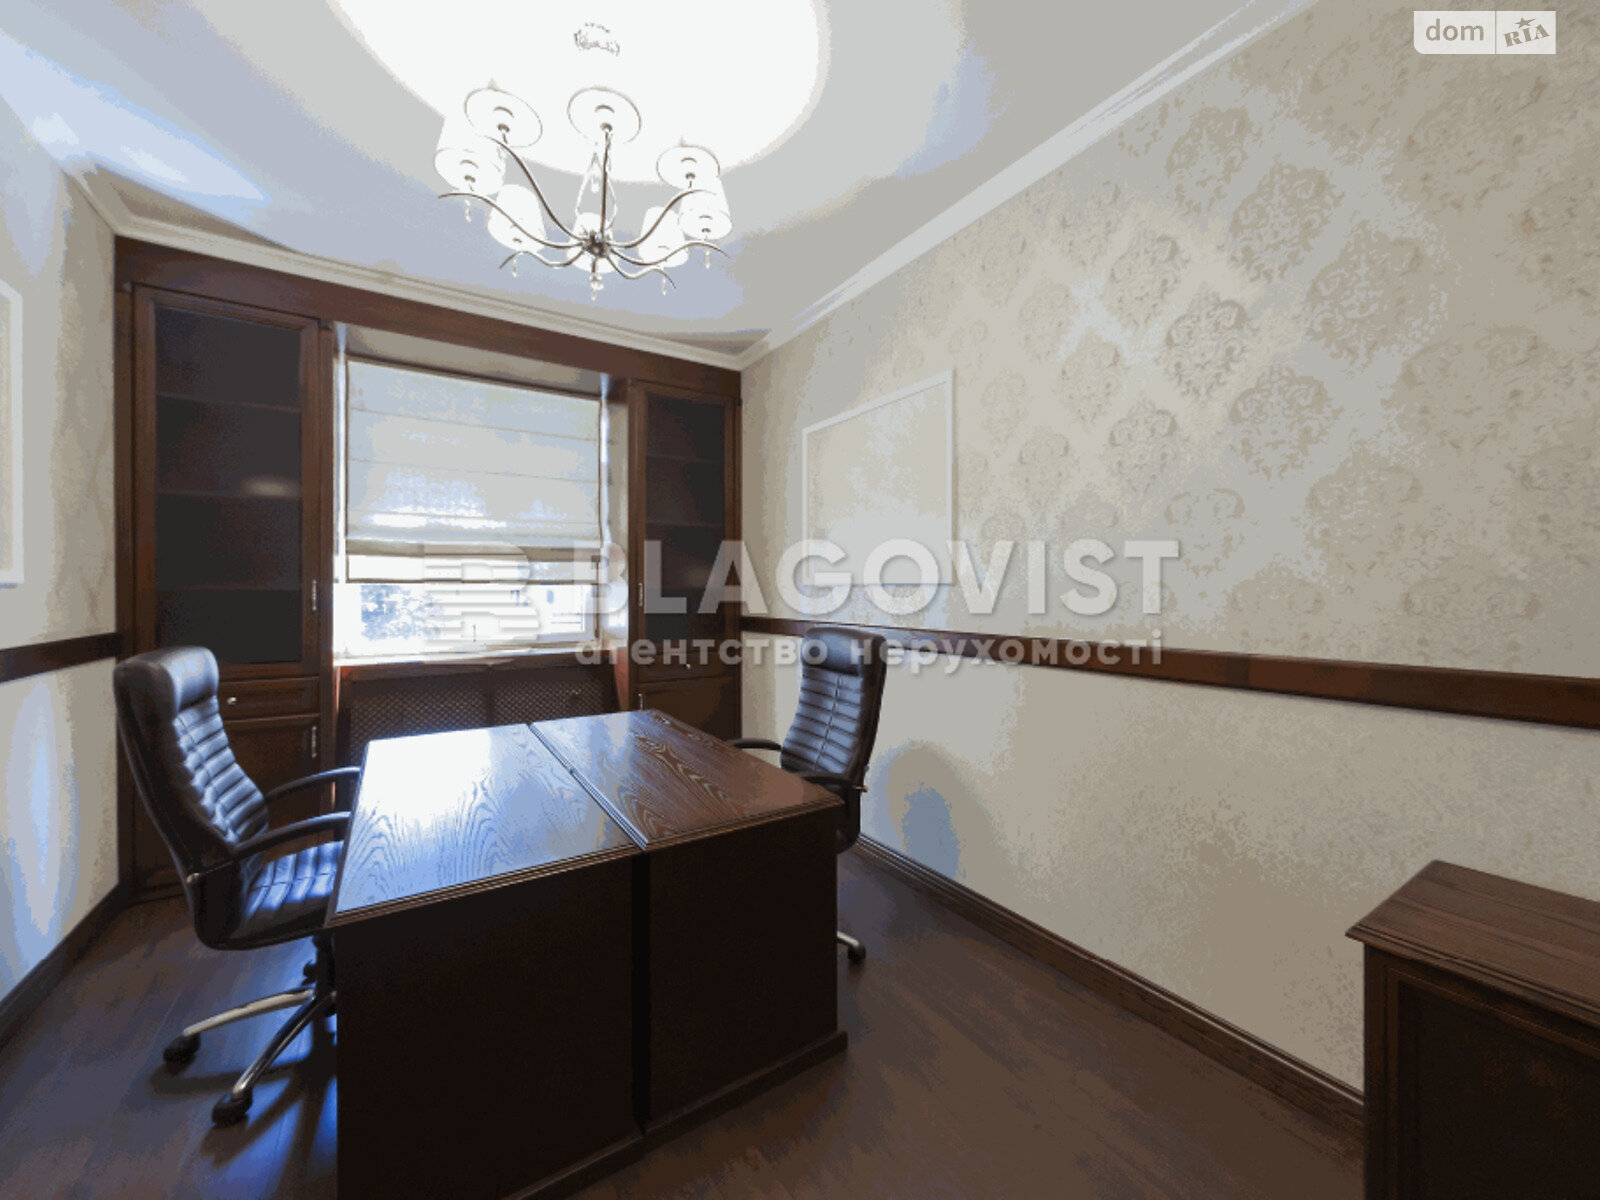 Продажа трехкомнатной квартиры в Киеве, на ул. Антоновича 131, район Голосеевский фото 1